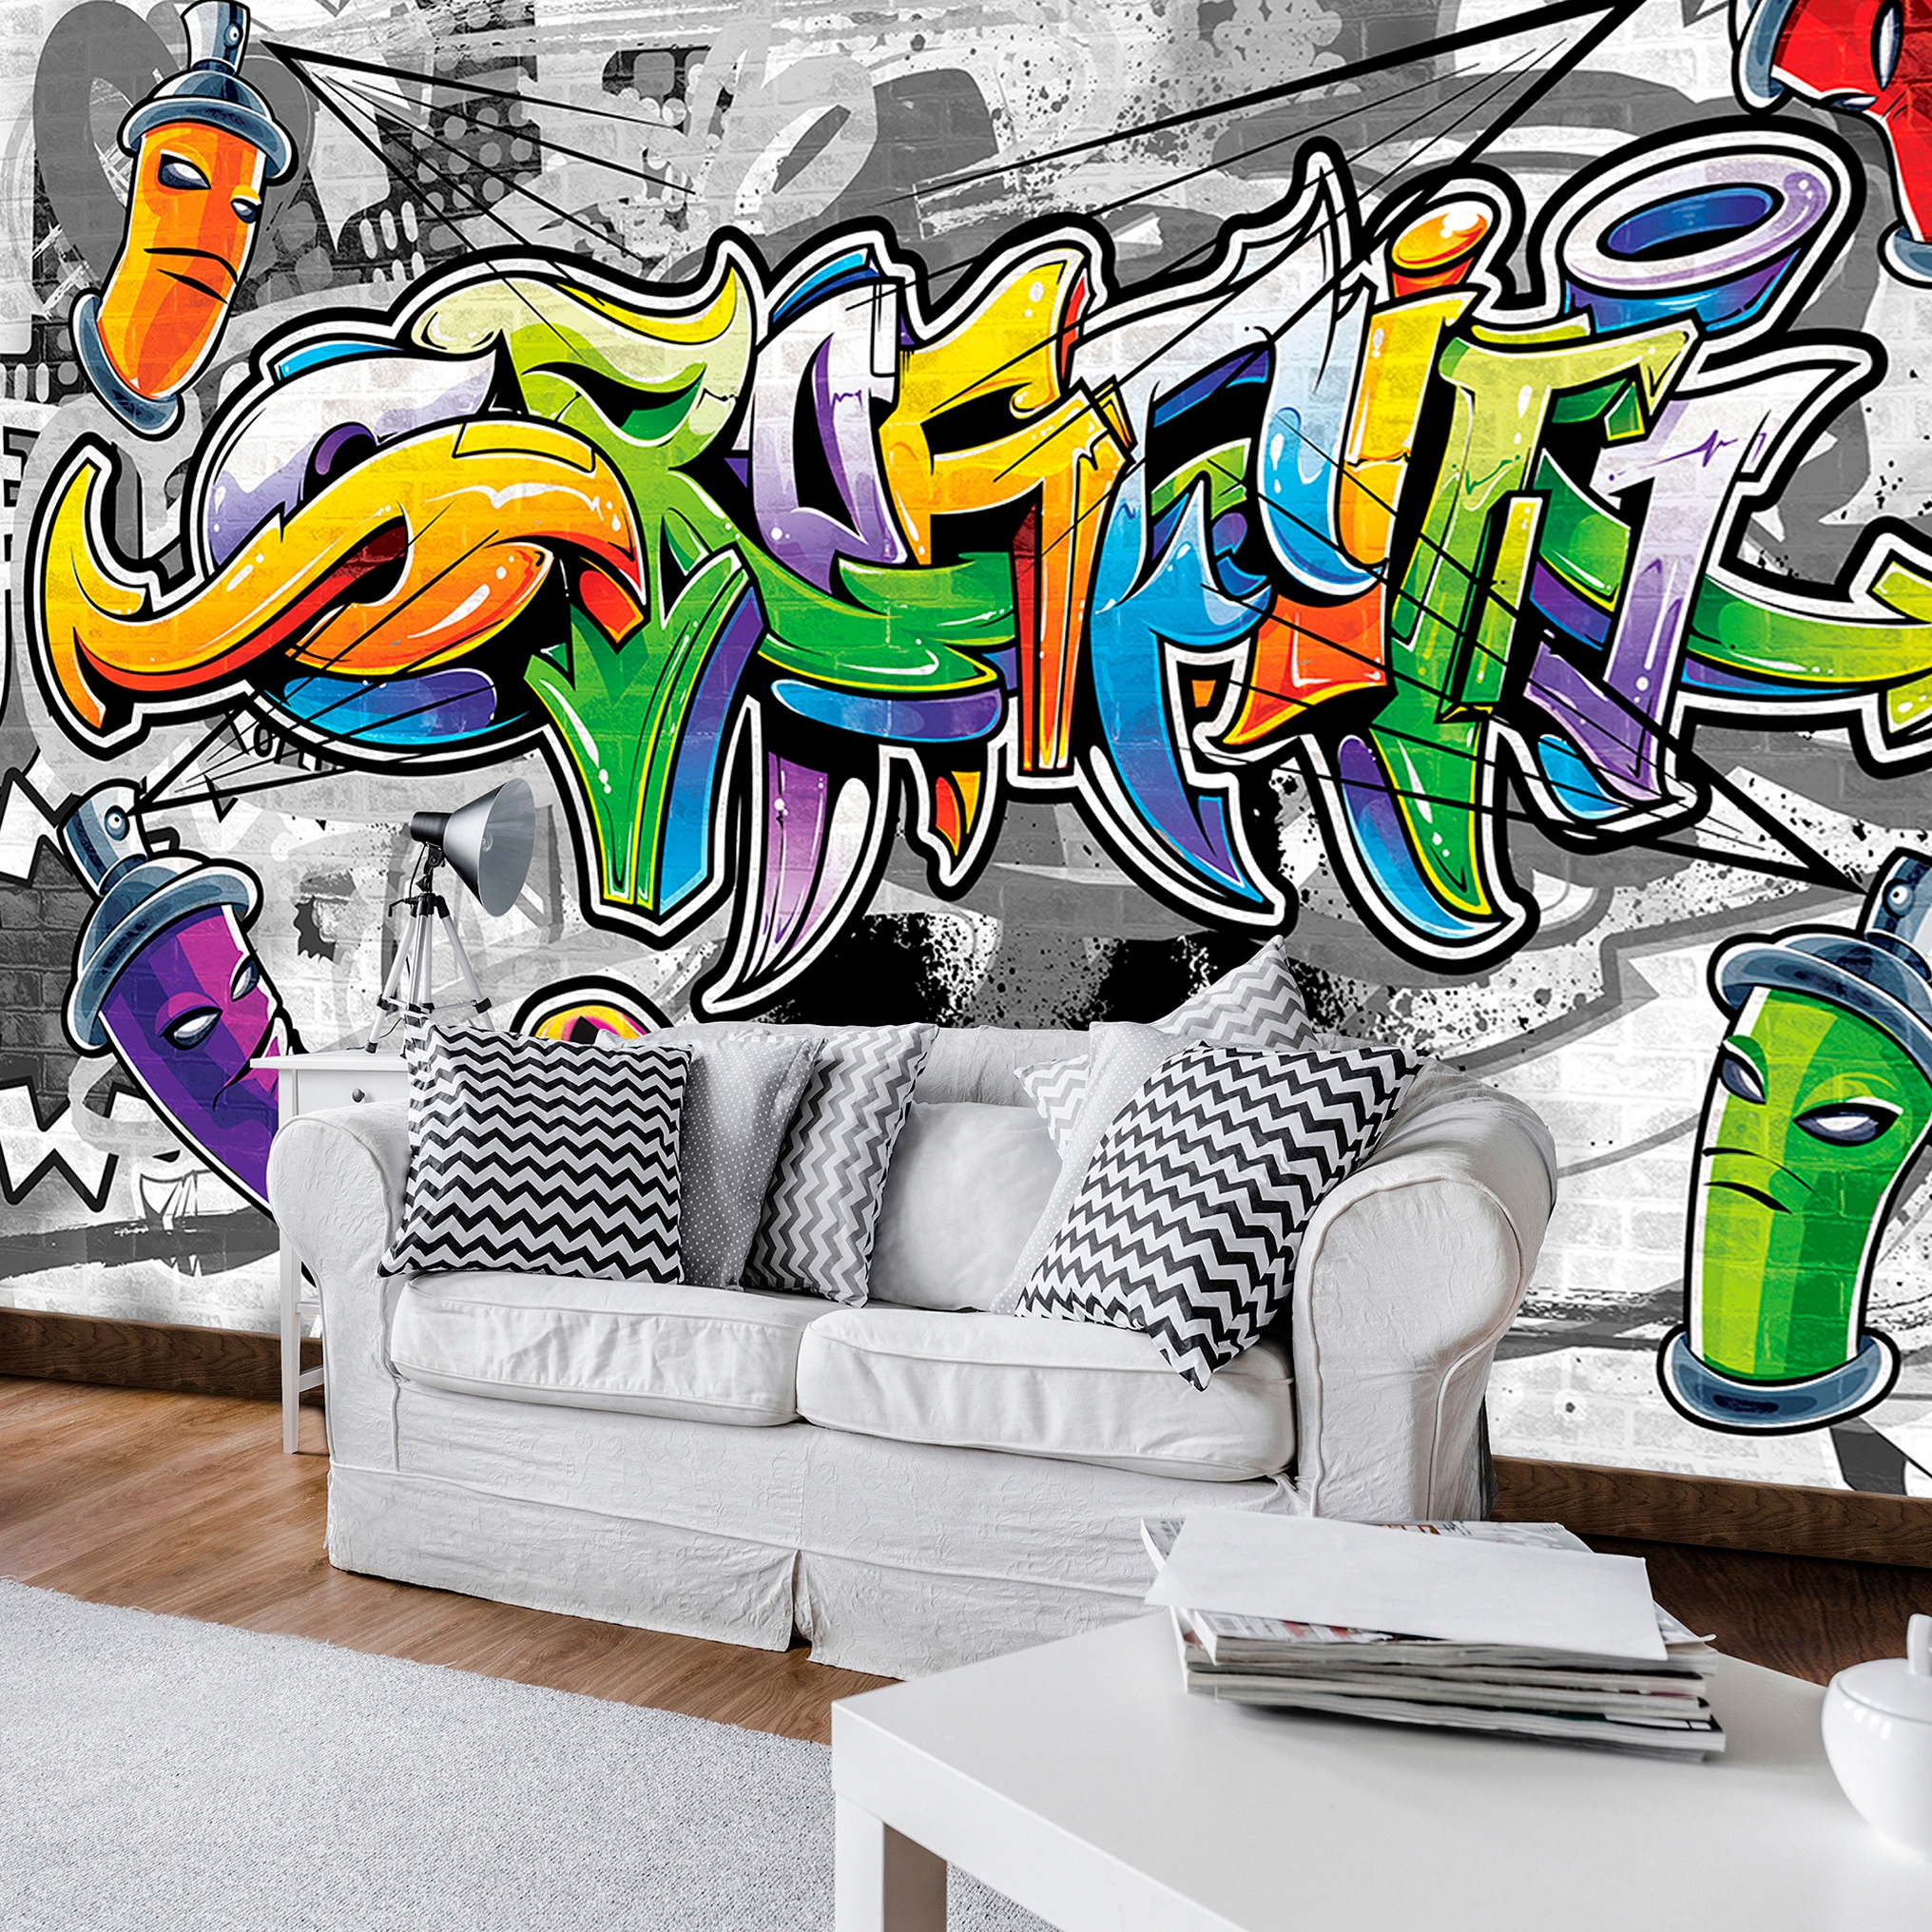 Consalnet Fototapete »Buntes Graffiti«, Motiv Raten auf kaufen